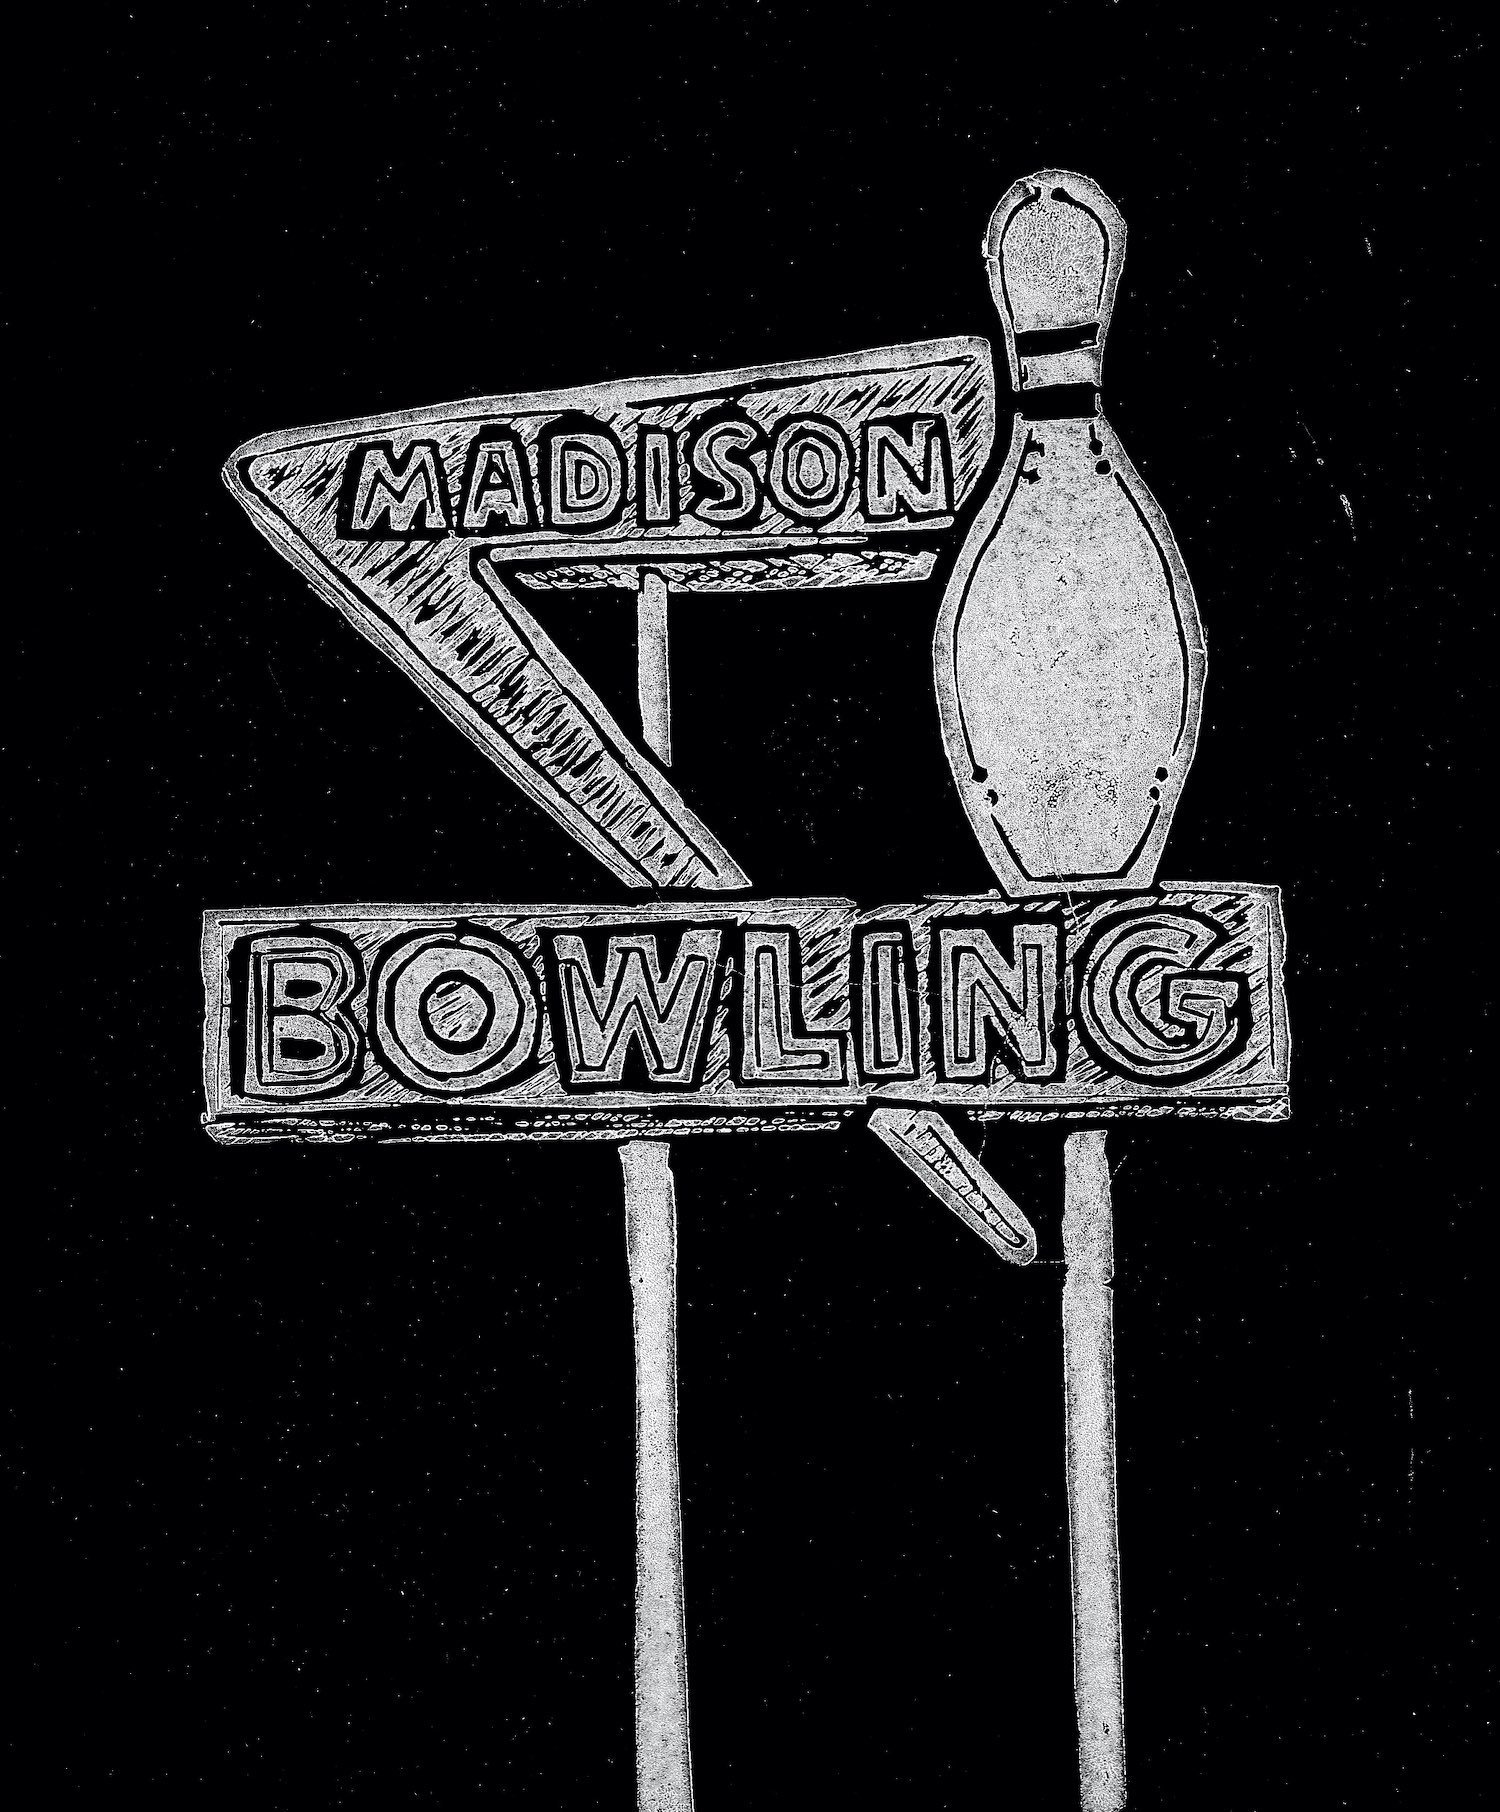 Madison Bowling sign block print by Charly Fasano.